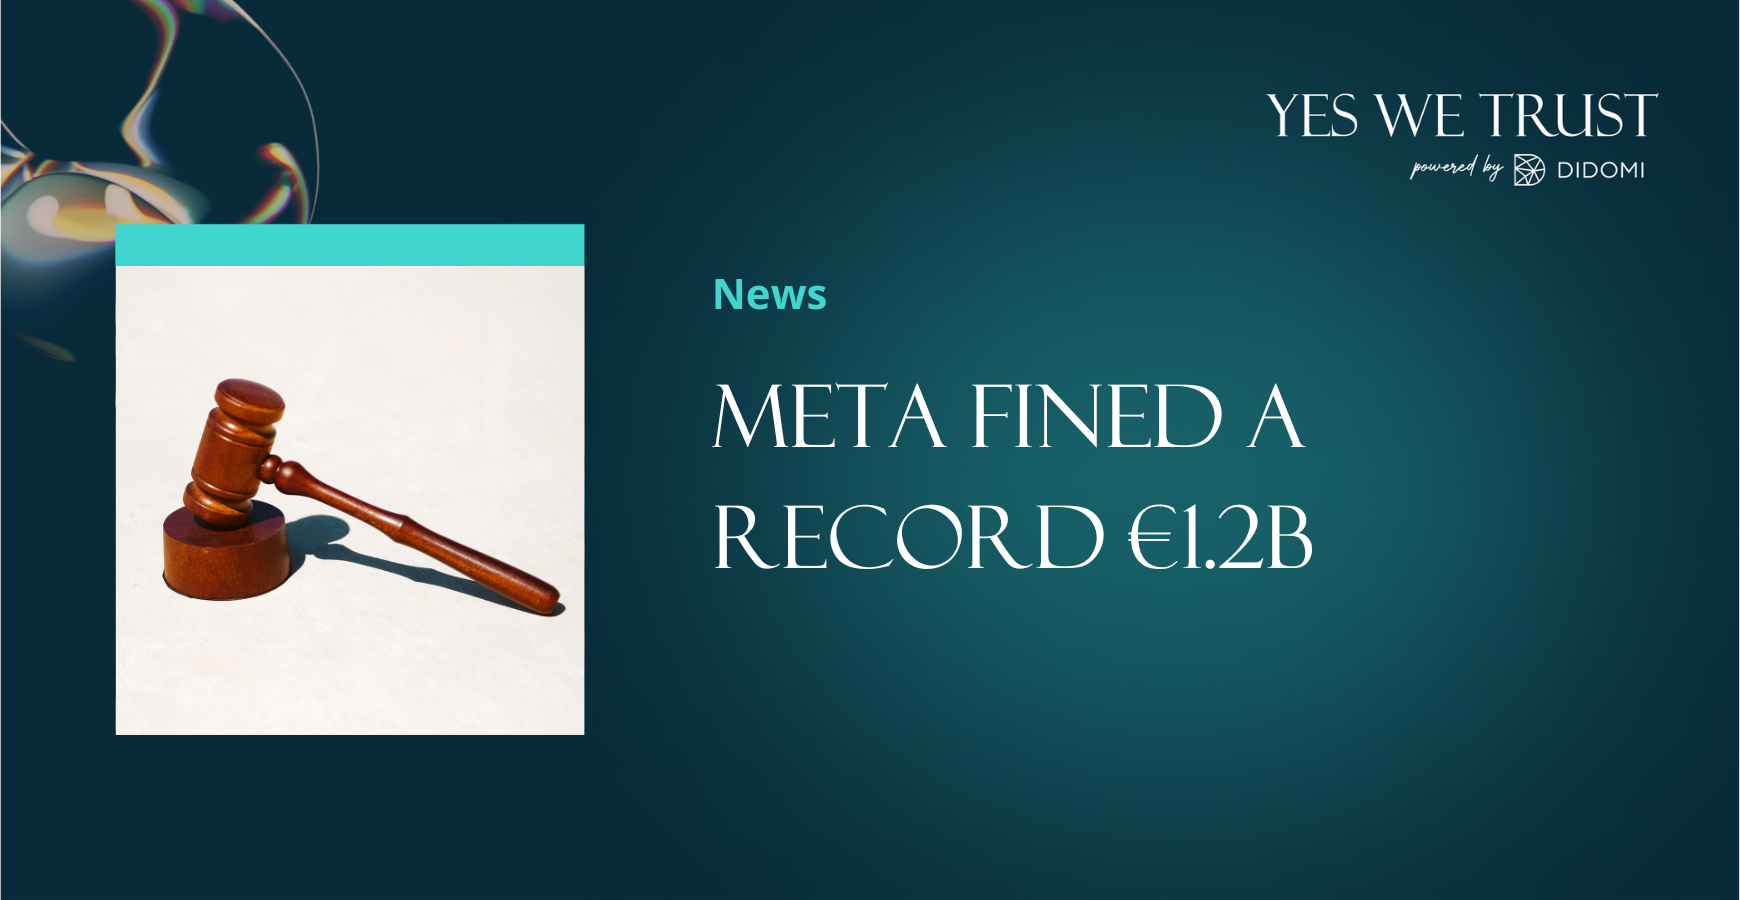 Meta fined a record €1.2B